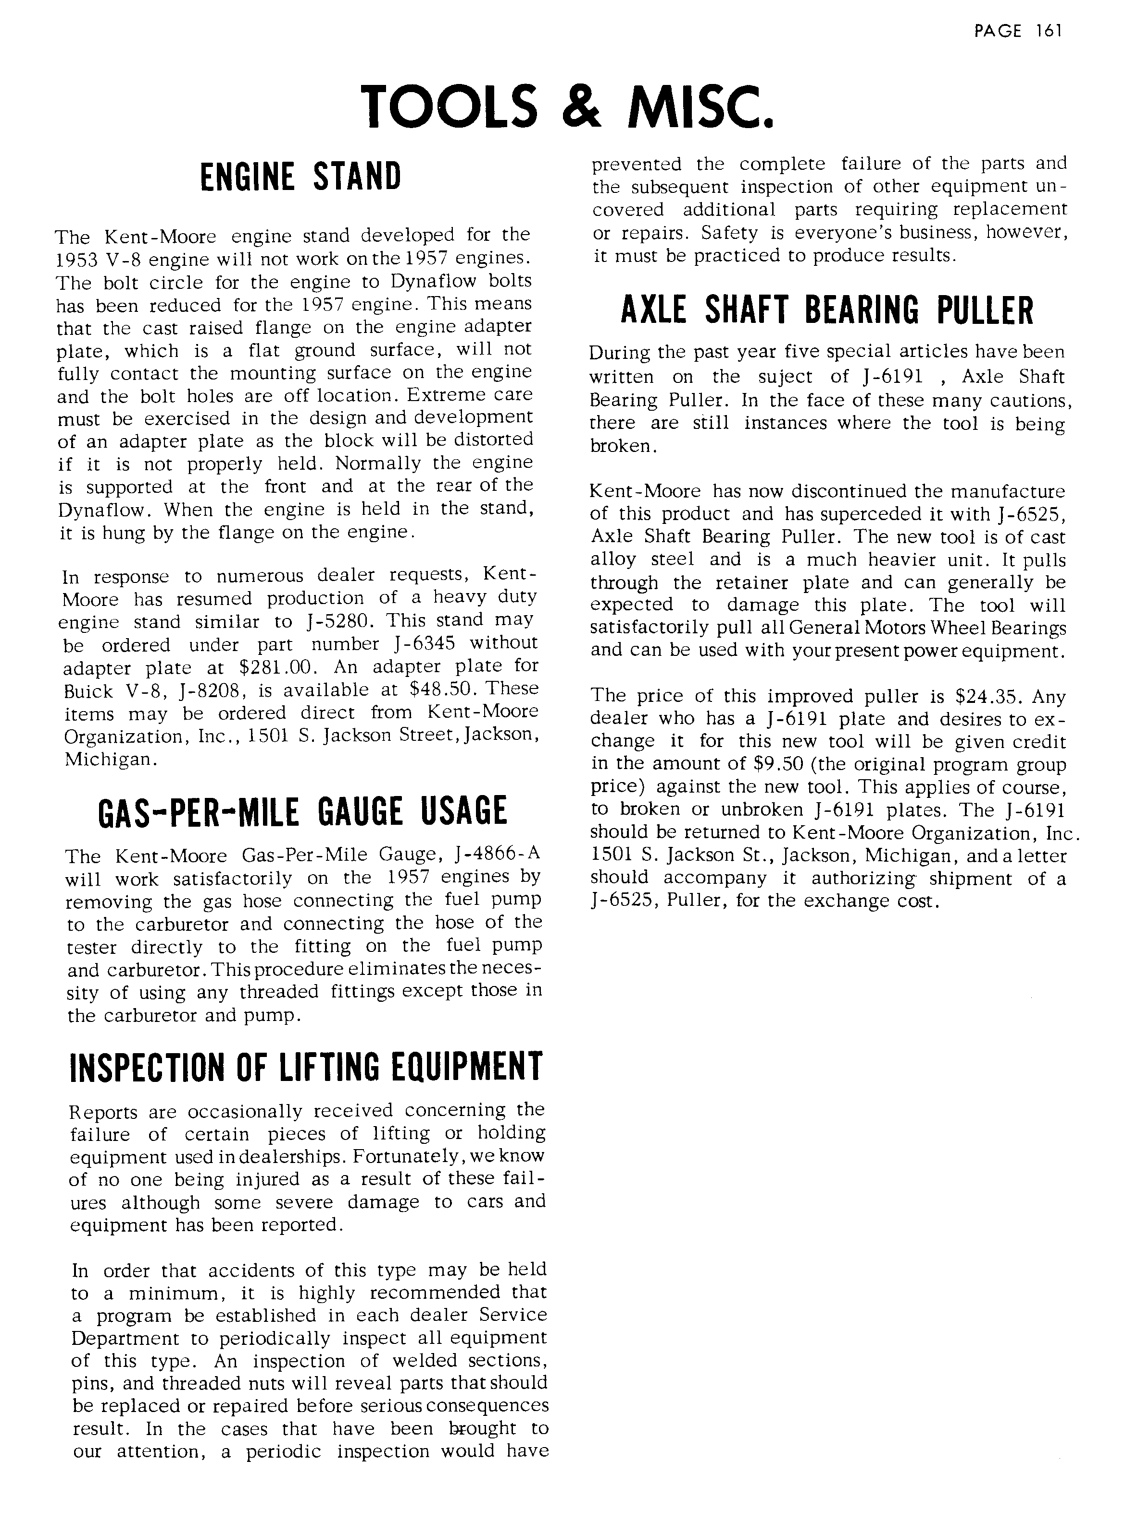 n_1957 Buick Product Service  Bulletins-161-161.jpg